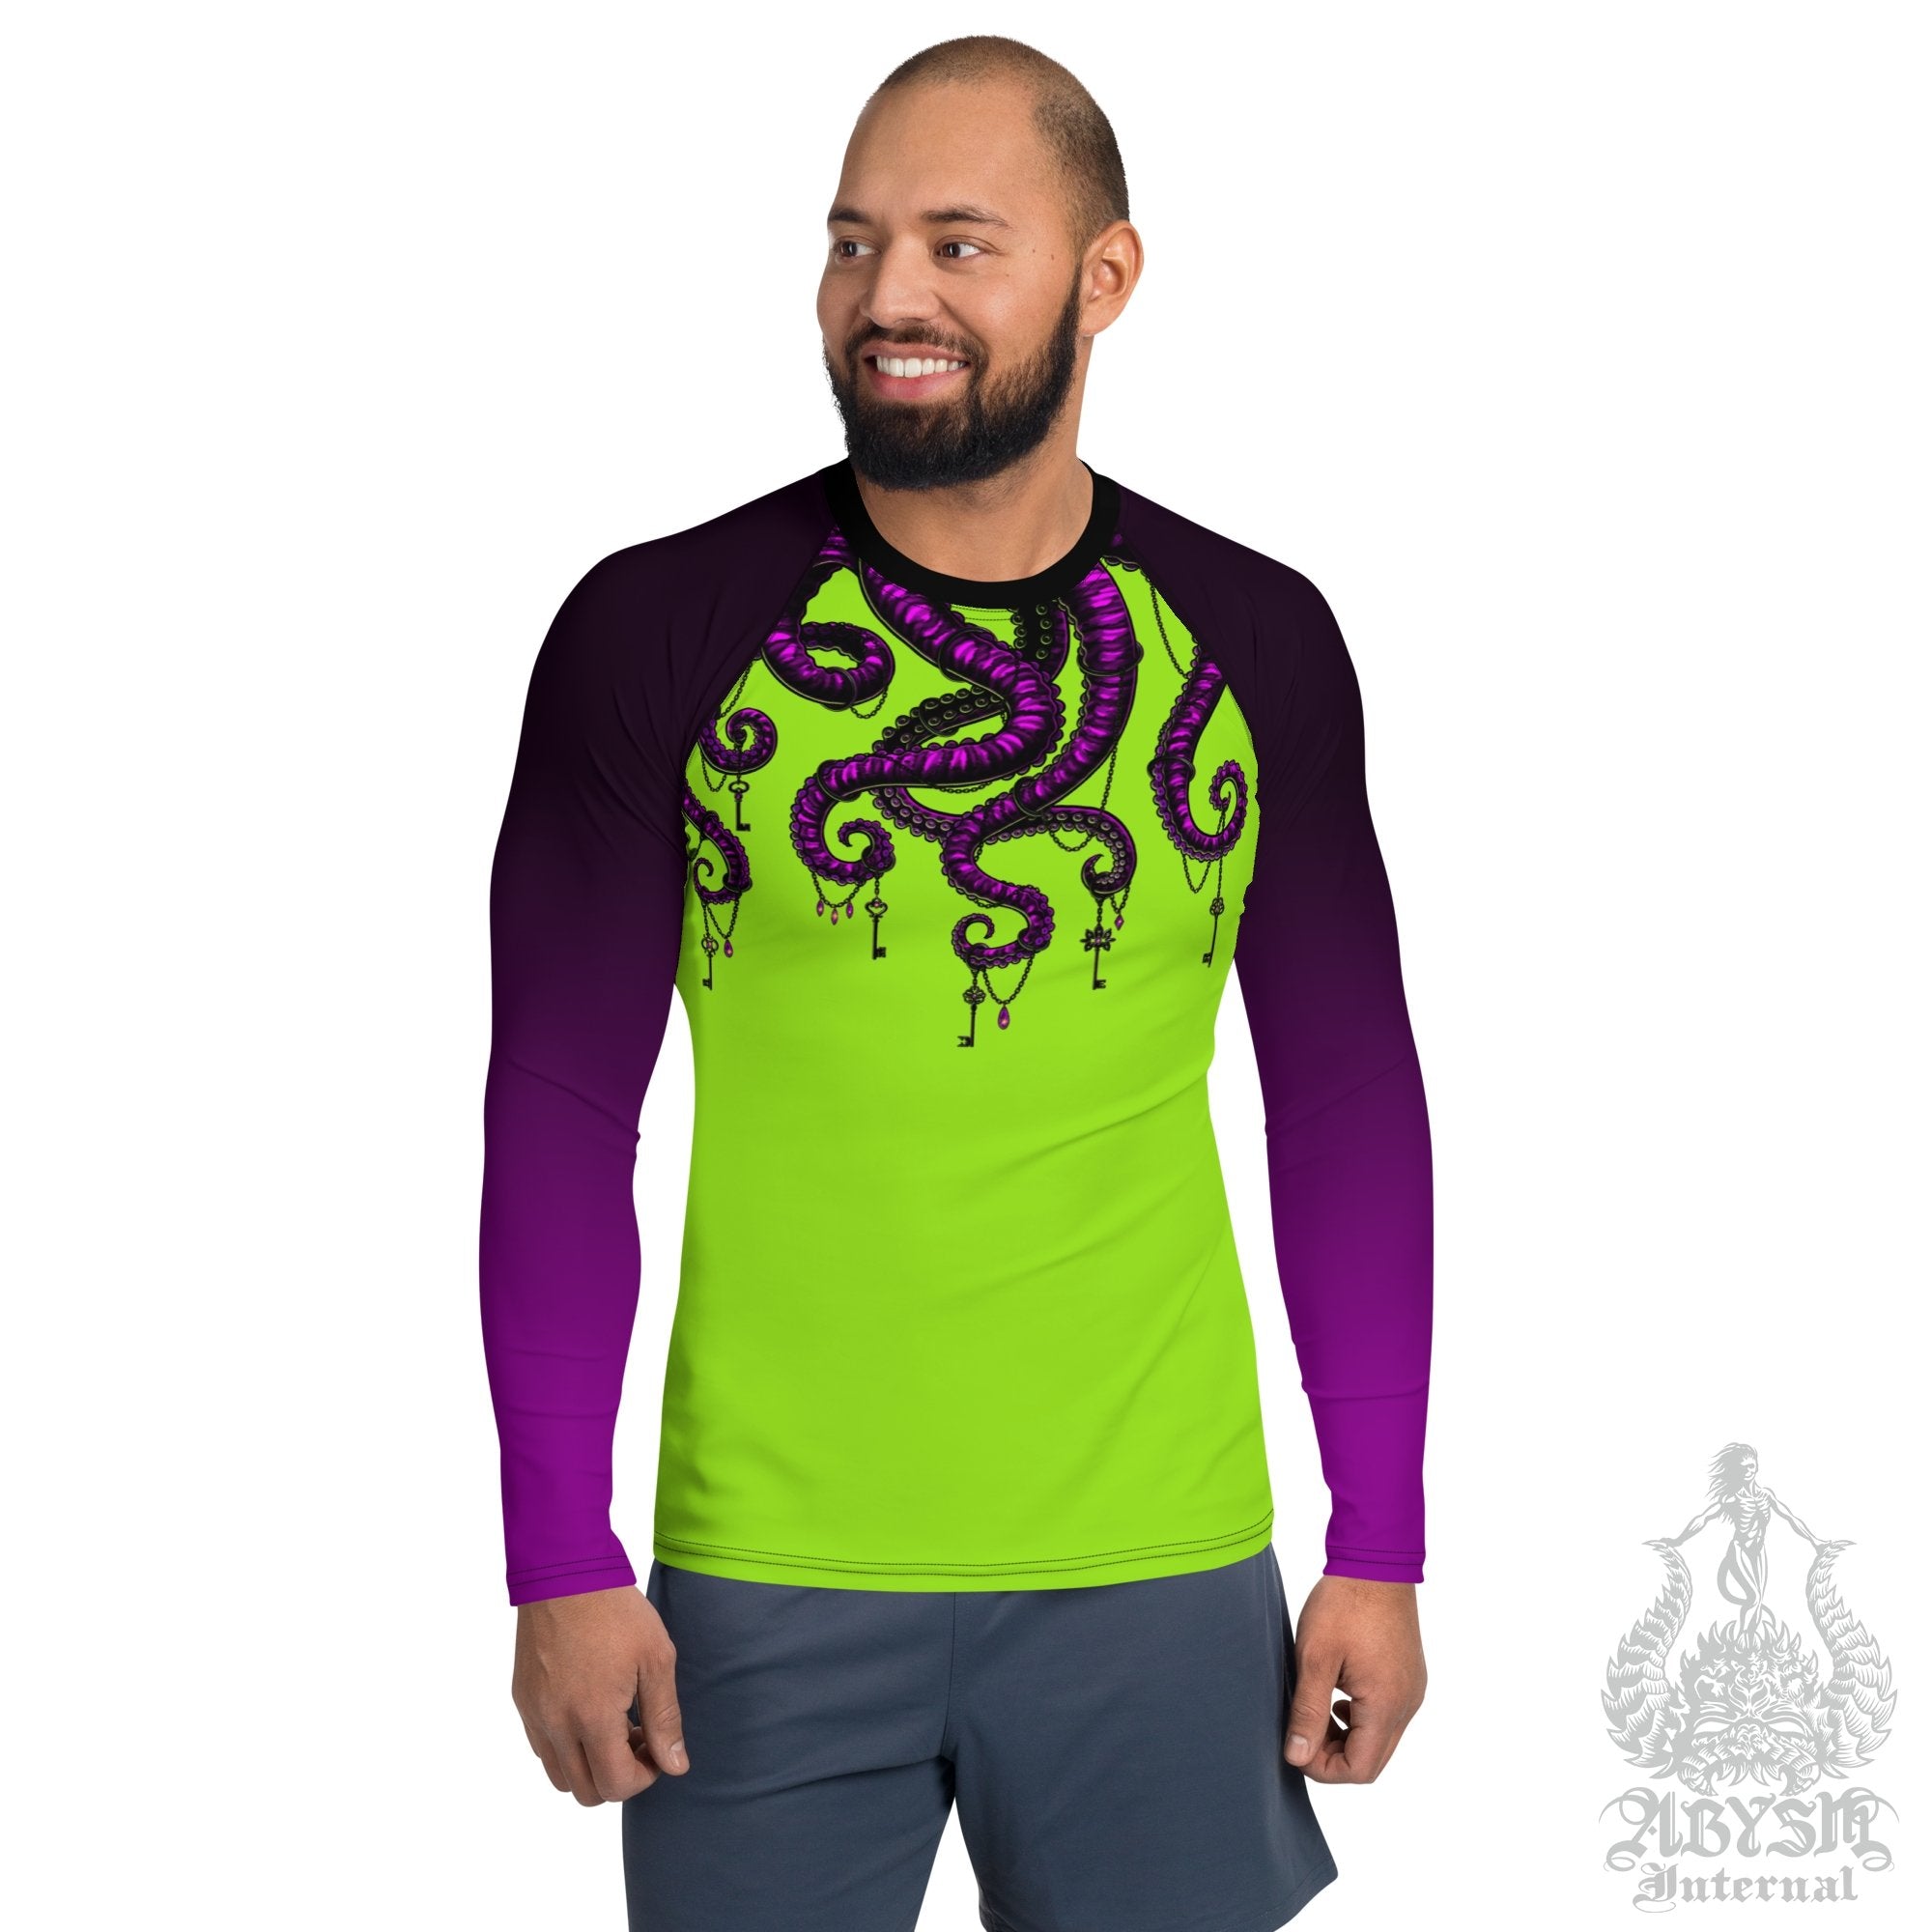 Green and Purple Men's Rash Guard, Long Sleeve spandex shirt for